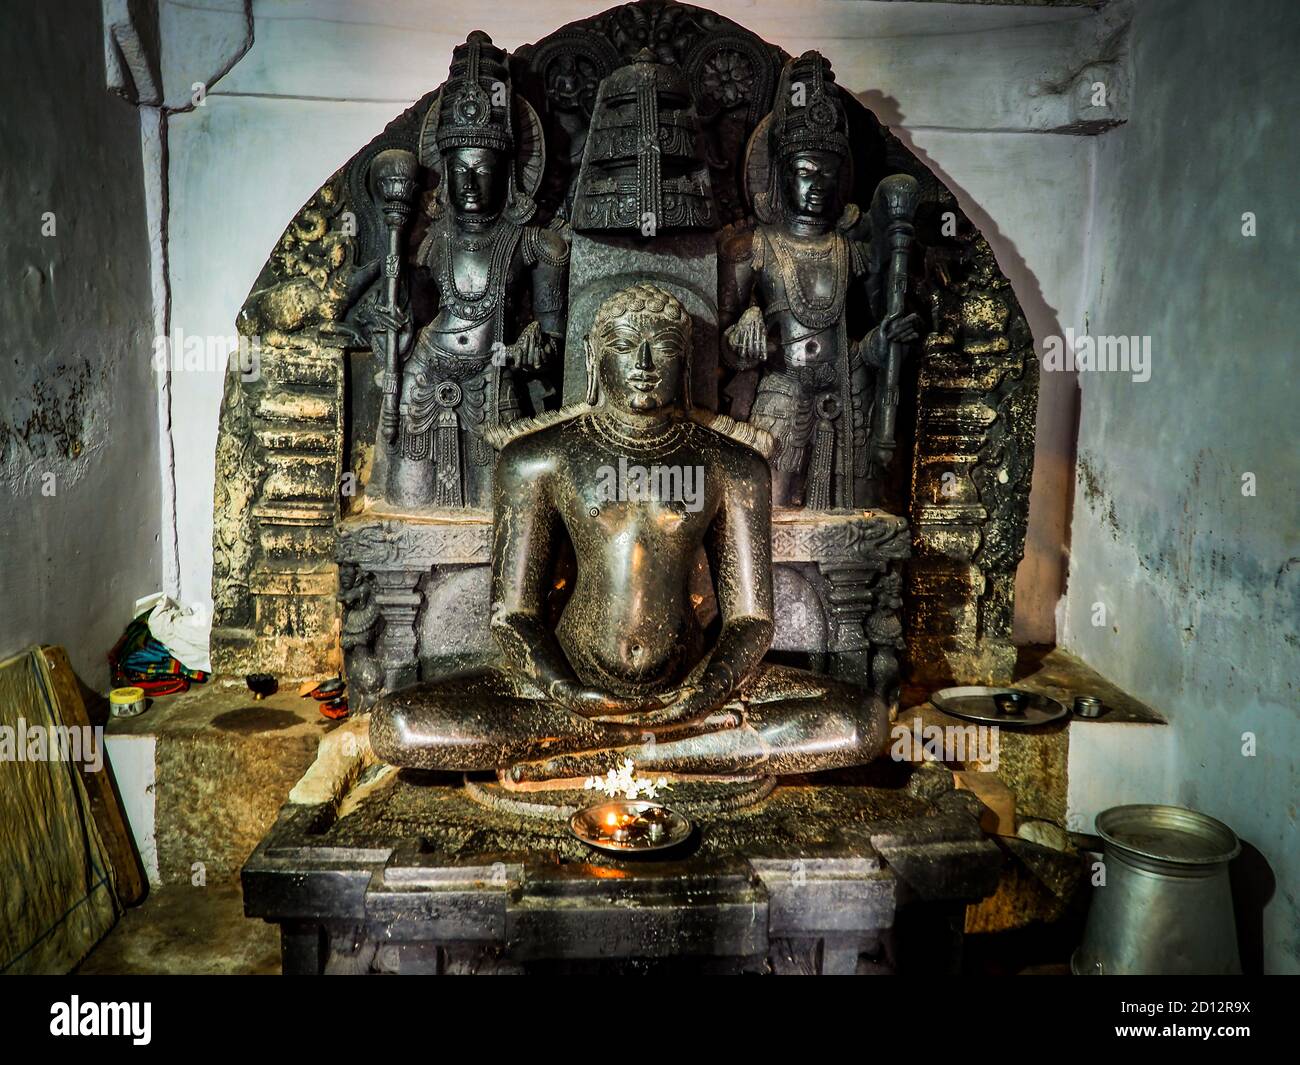 Jainism temple and statue of Tirthankara. Shravanabelagola, Karnataka, India. Stock Photo